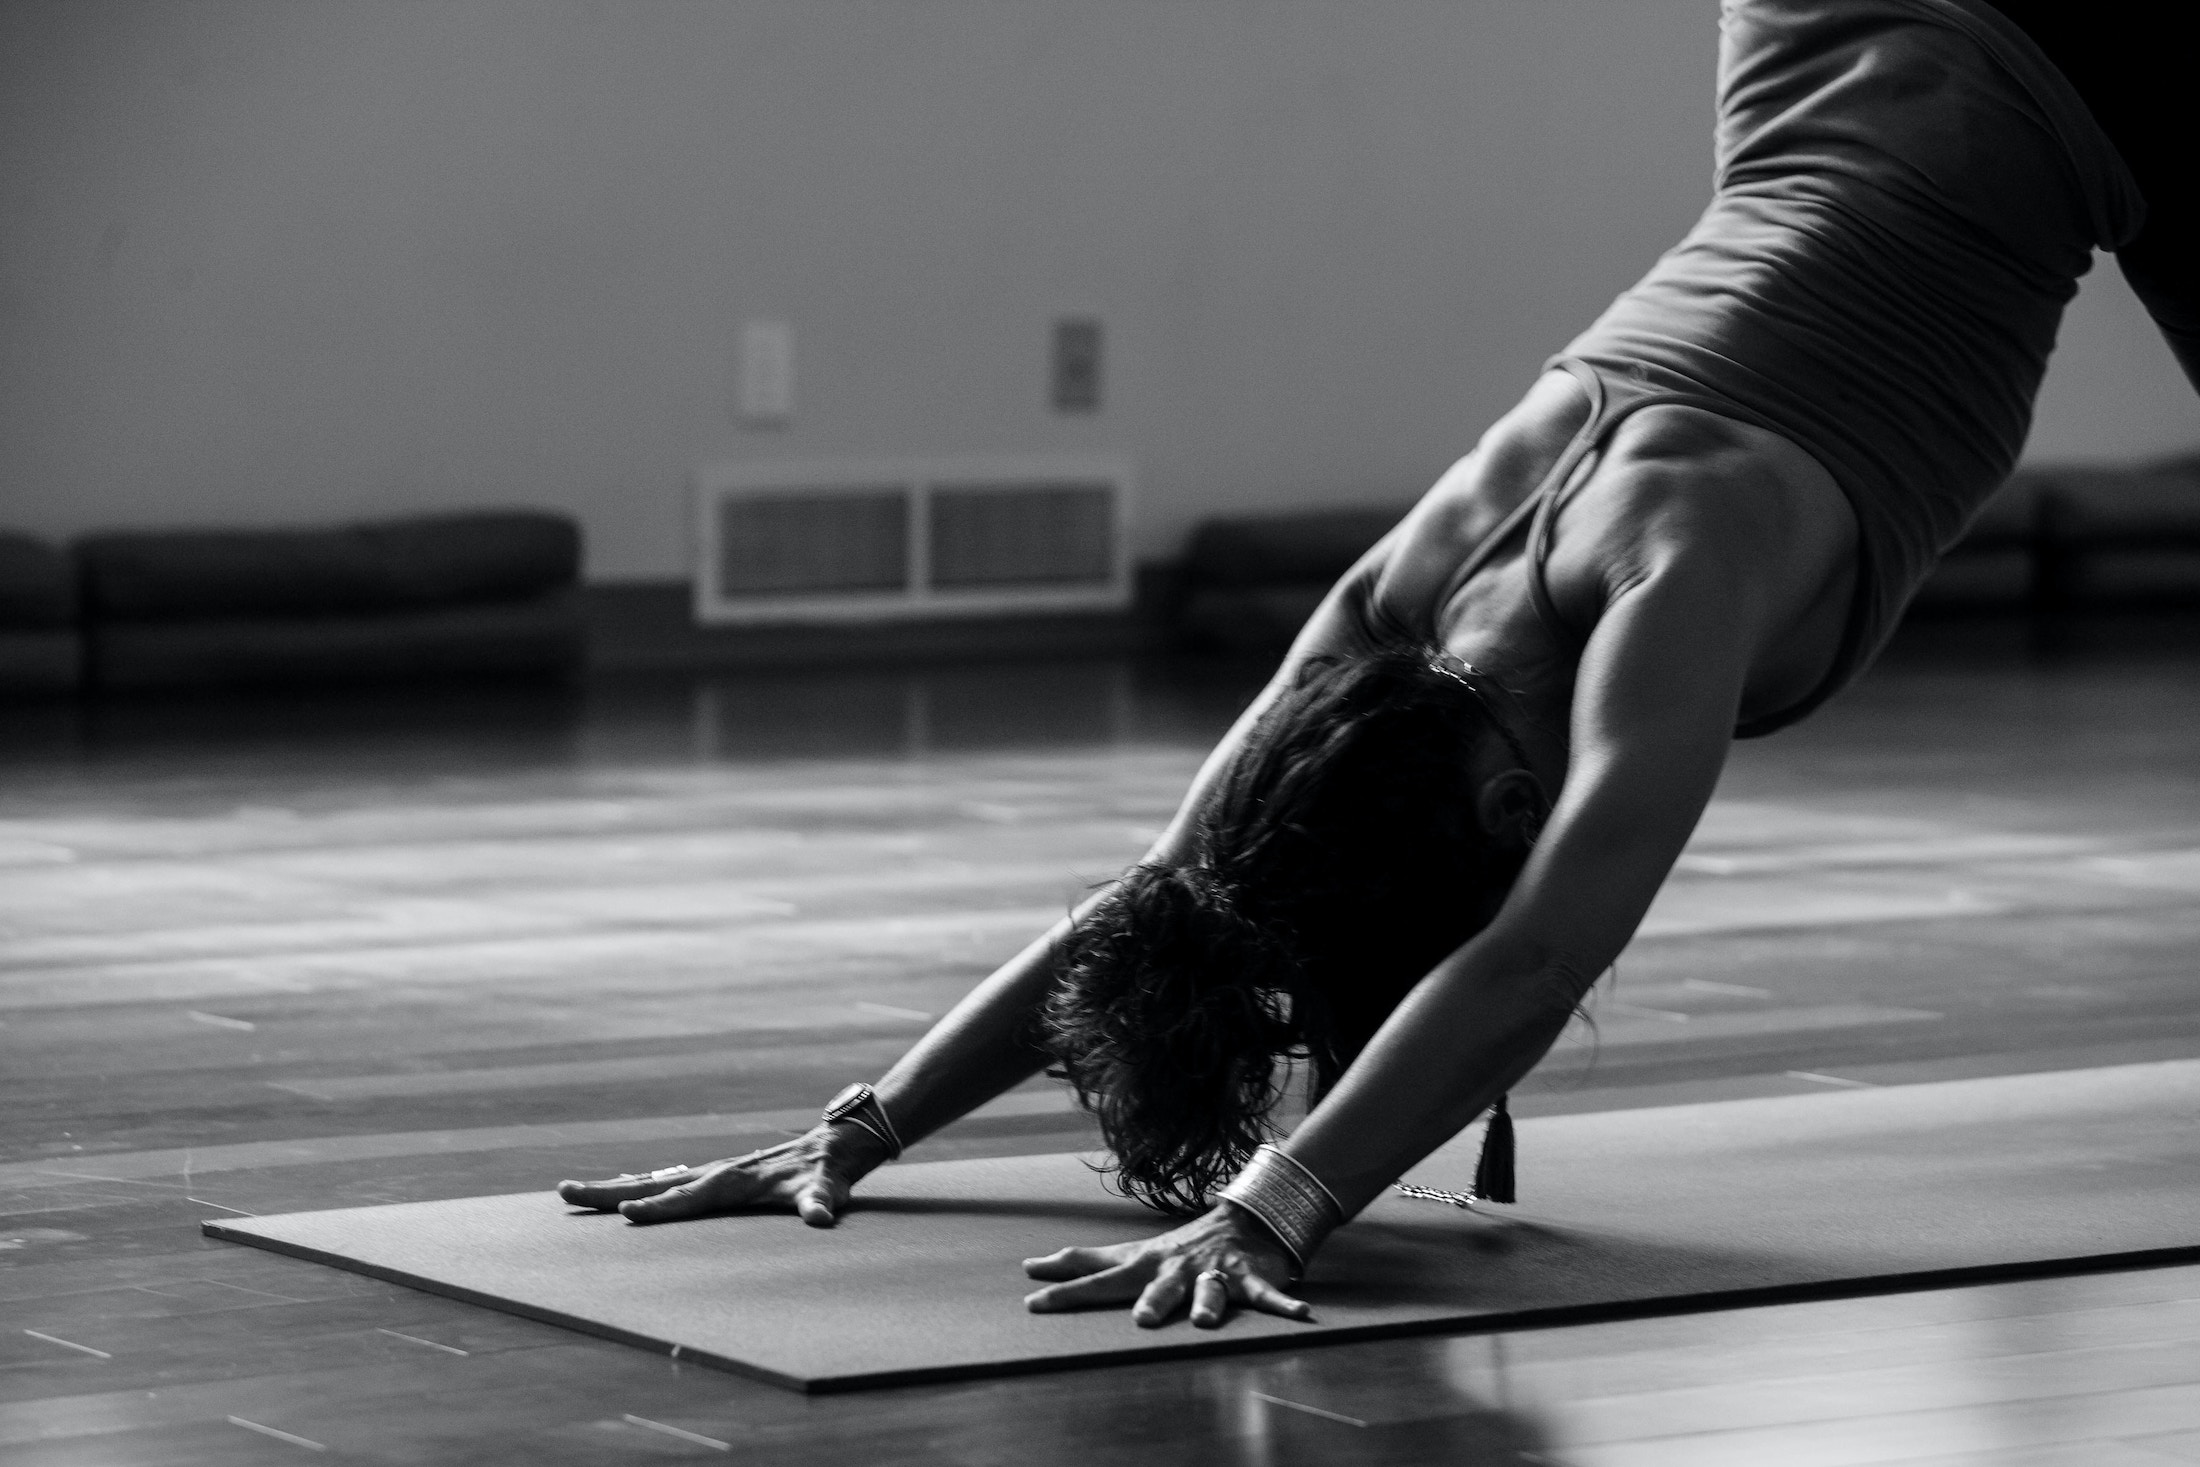 Nine Benefits of Yoga for Seniors